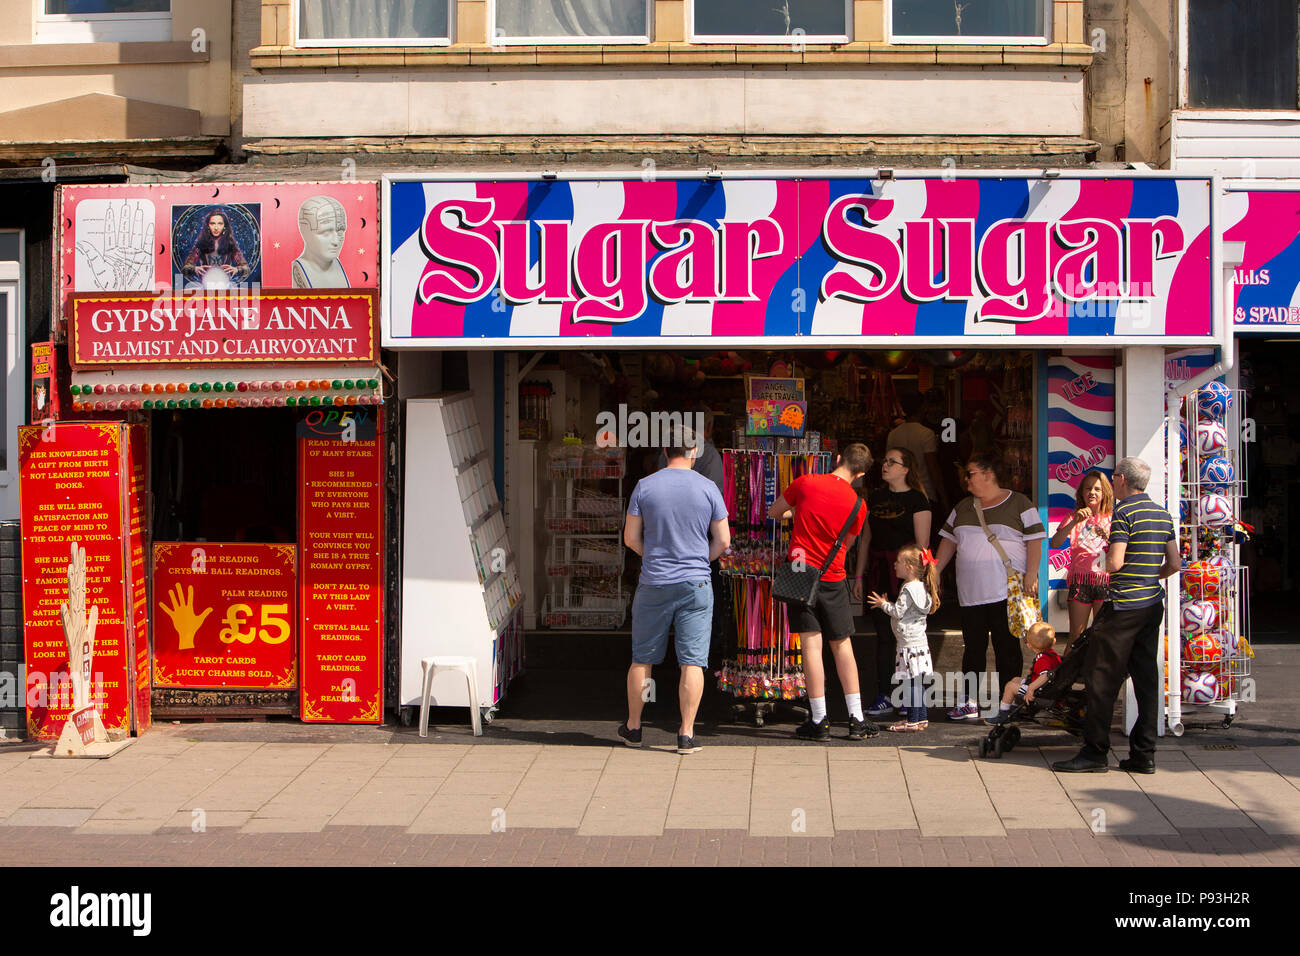 UK, England, Lancashire, Blackpool, Promenade, Palmist and Clairvoyant Gypsy Jane Anna next to Sugar Sugar sweet shop Stock Photo